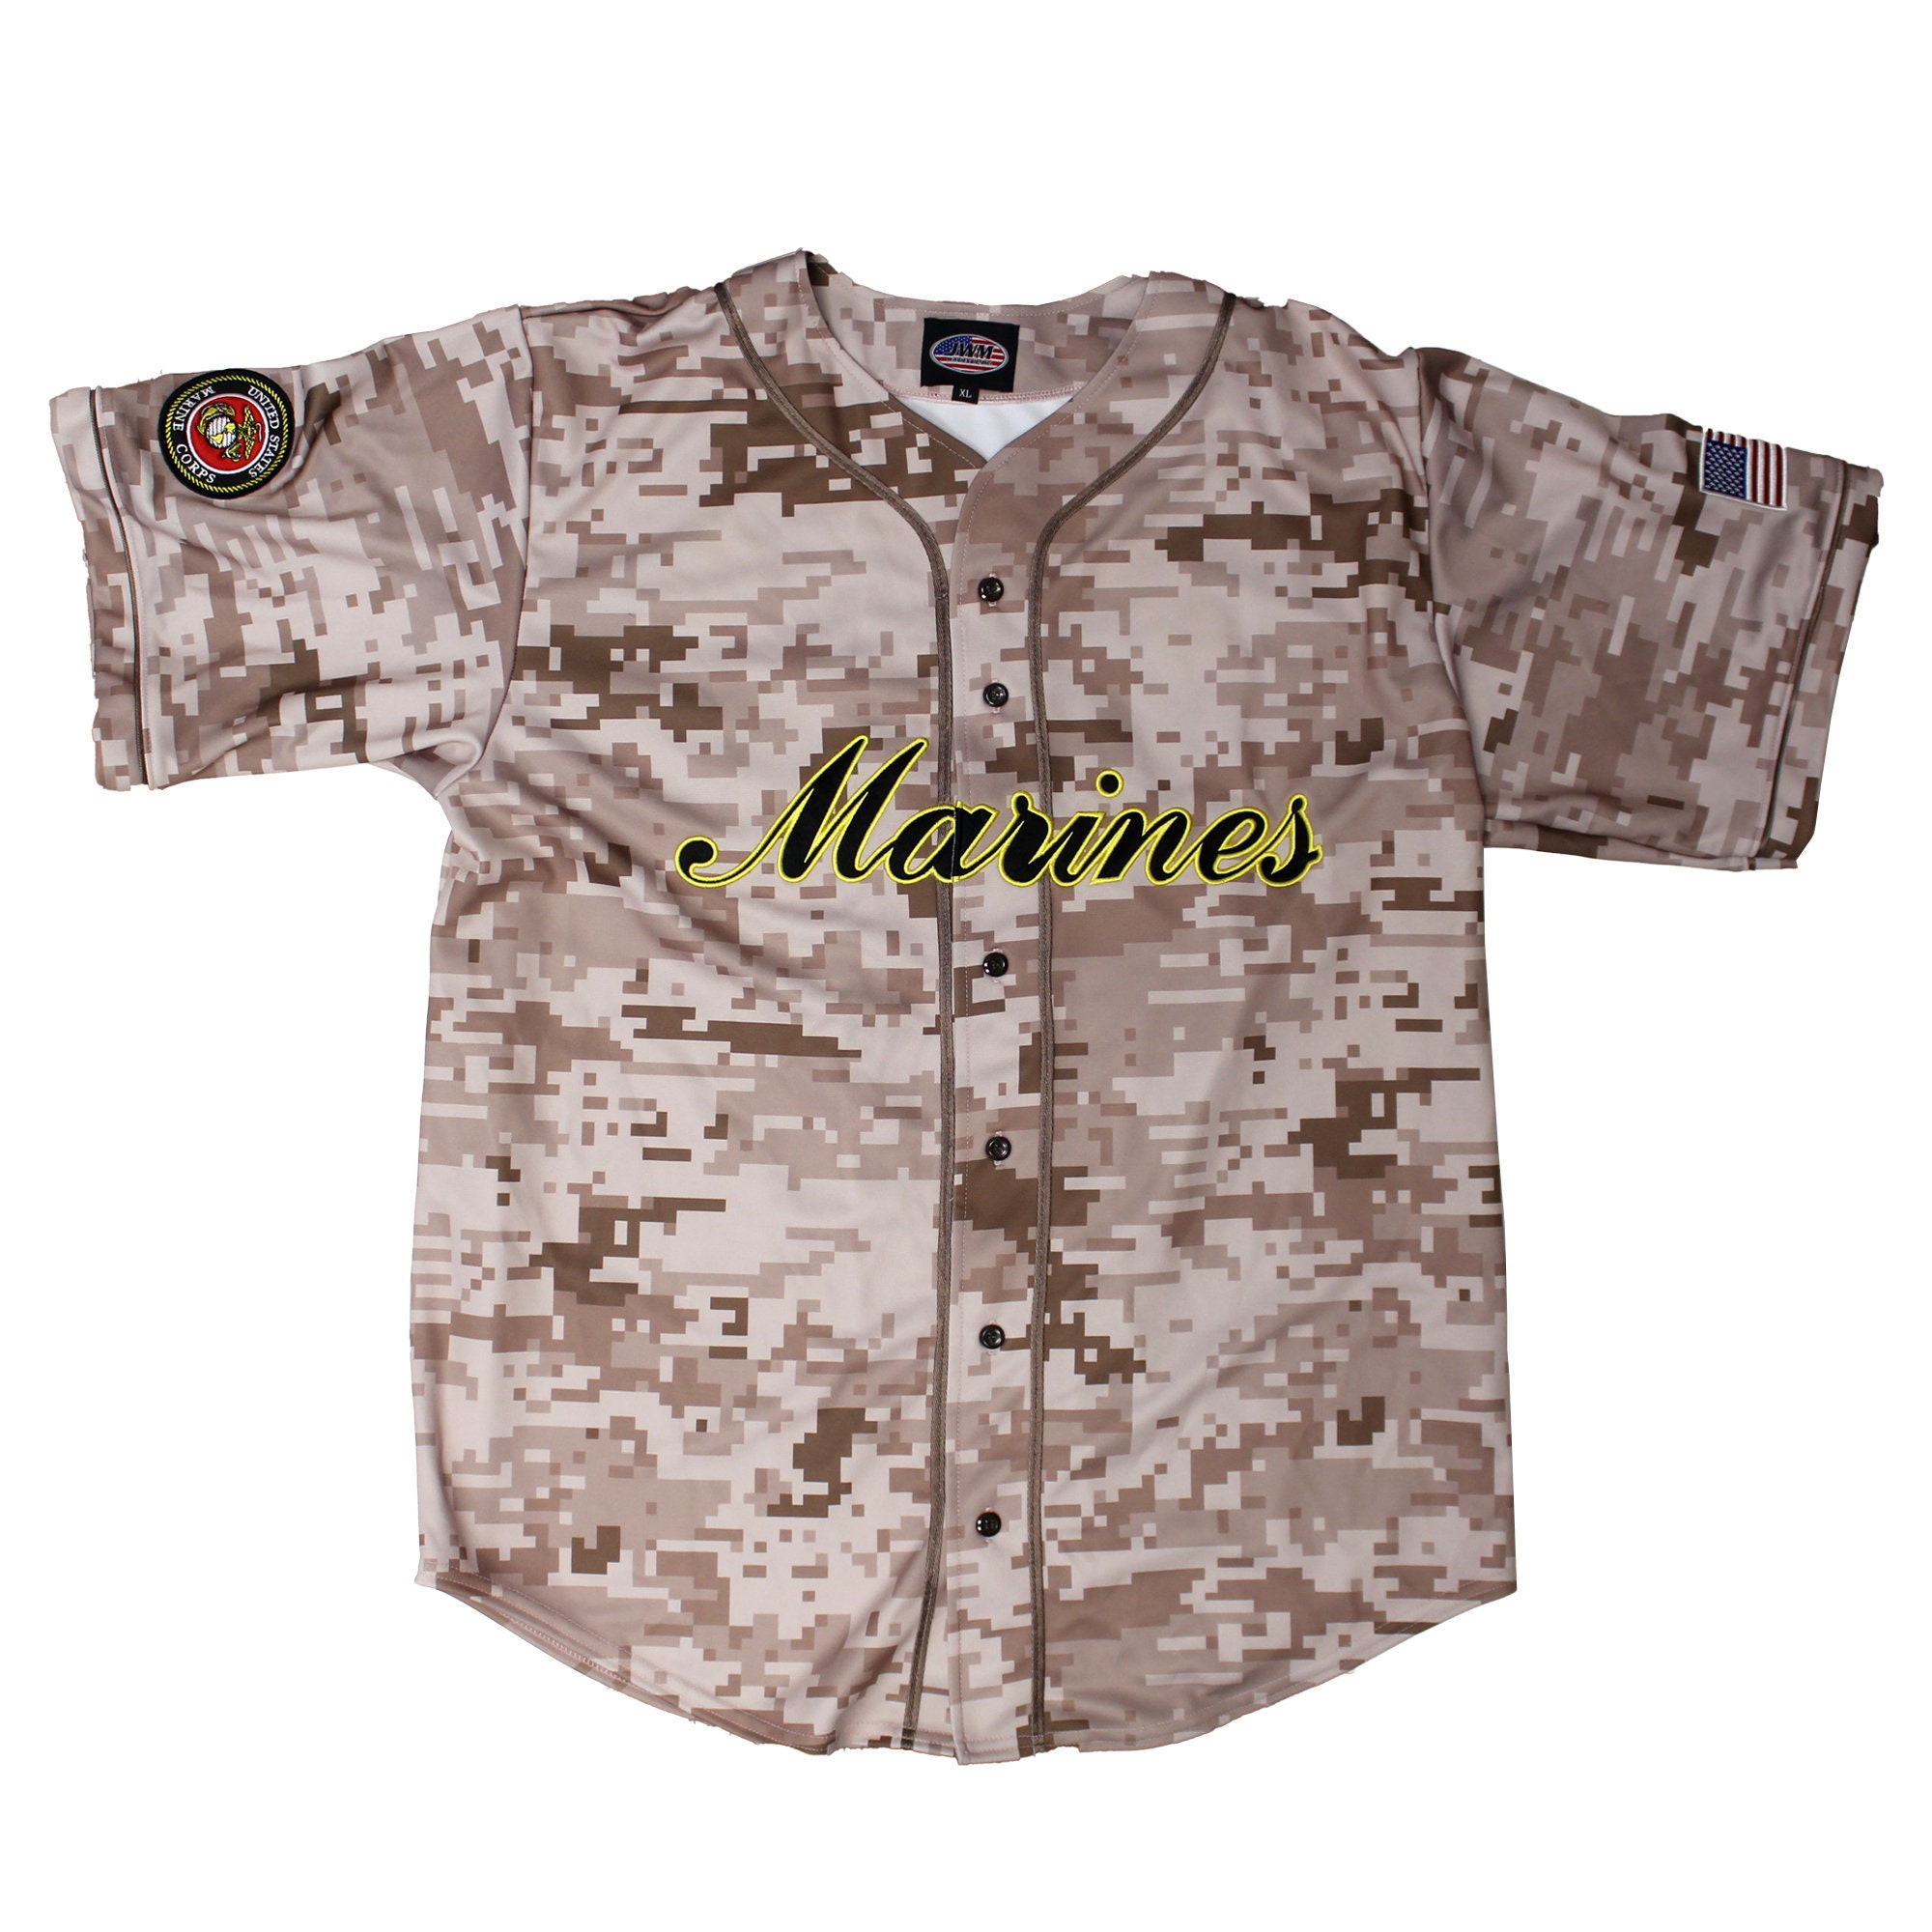 Baseball Debut New Digital Camo Jerseys for Military Appreciation Day